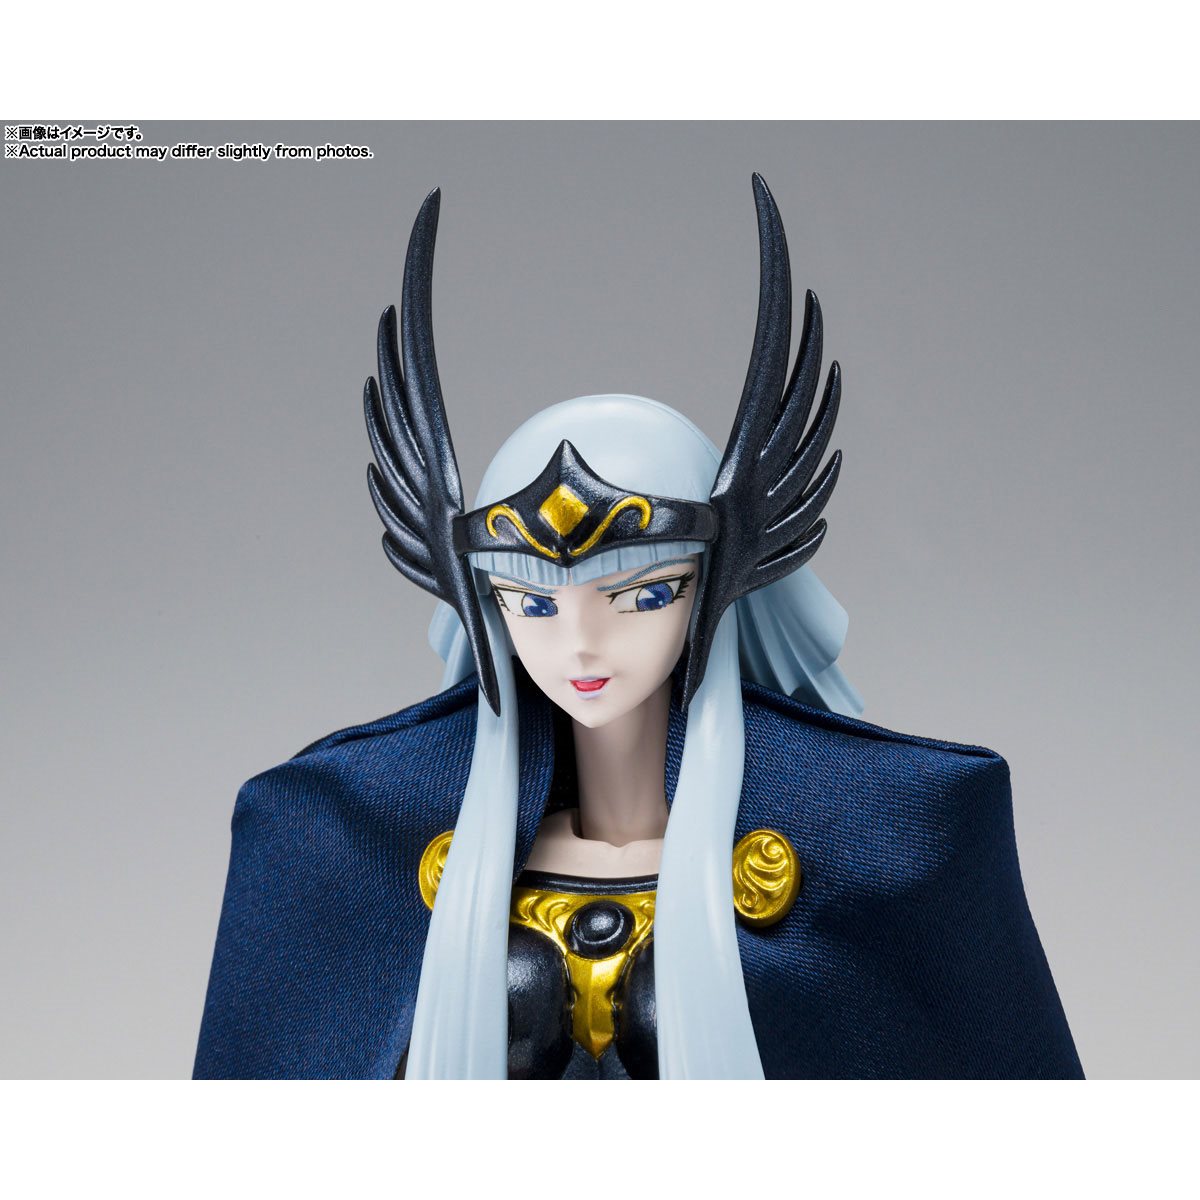 Bandai Tamashi Nations Myth Cloth EX: Saint Seiya Saga de Asgard - Hilda de Polaris Figura de Acci√≥n